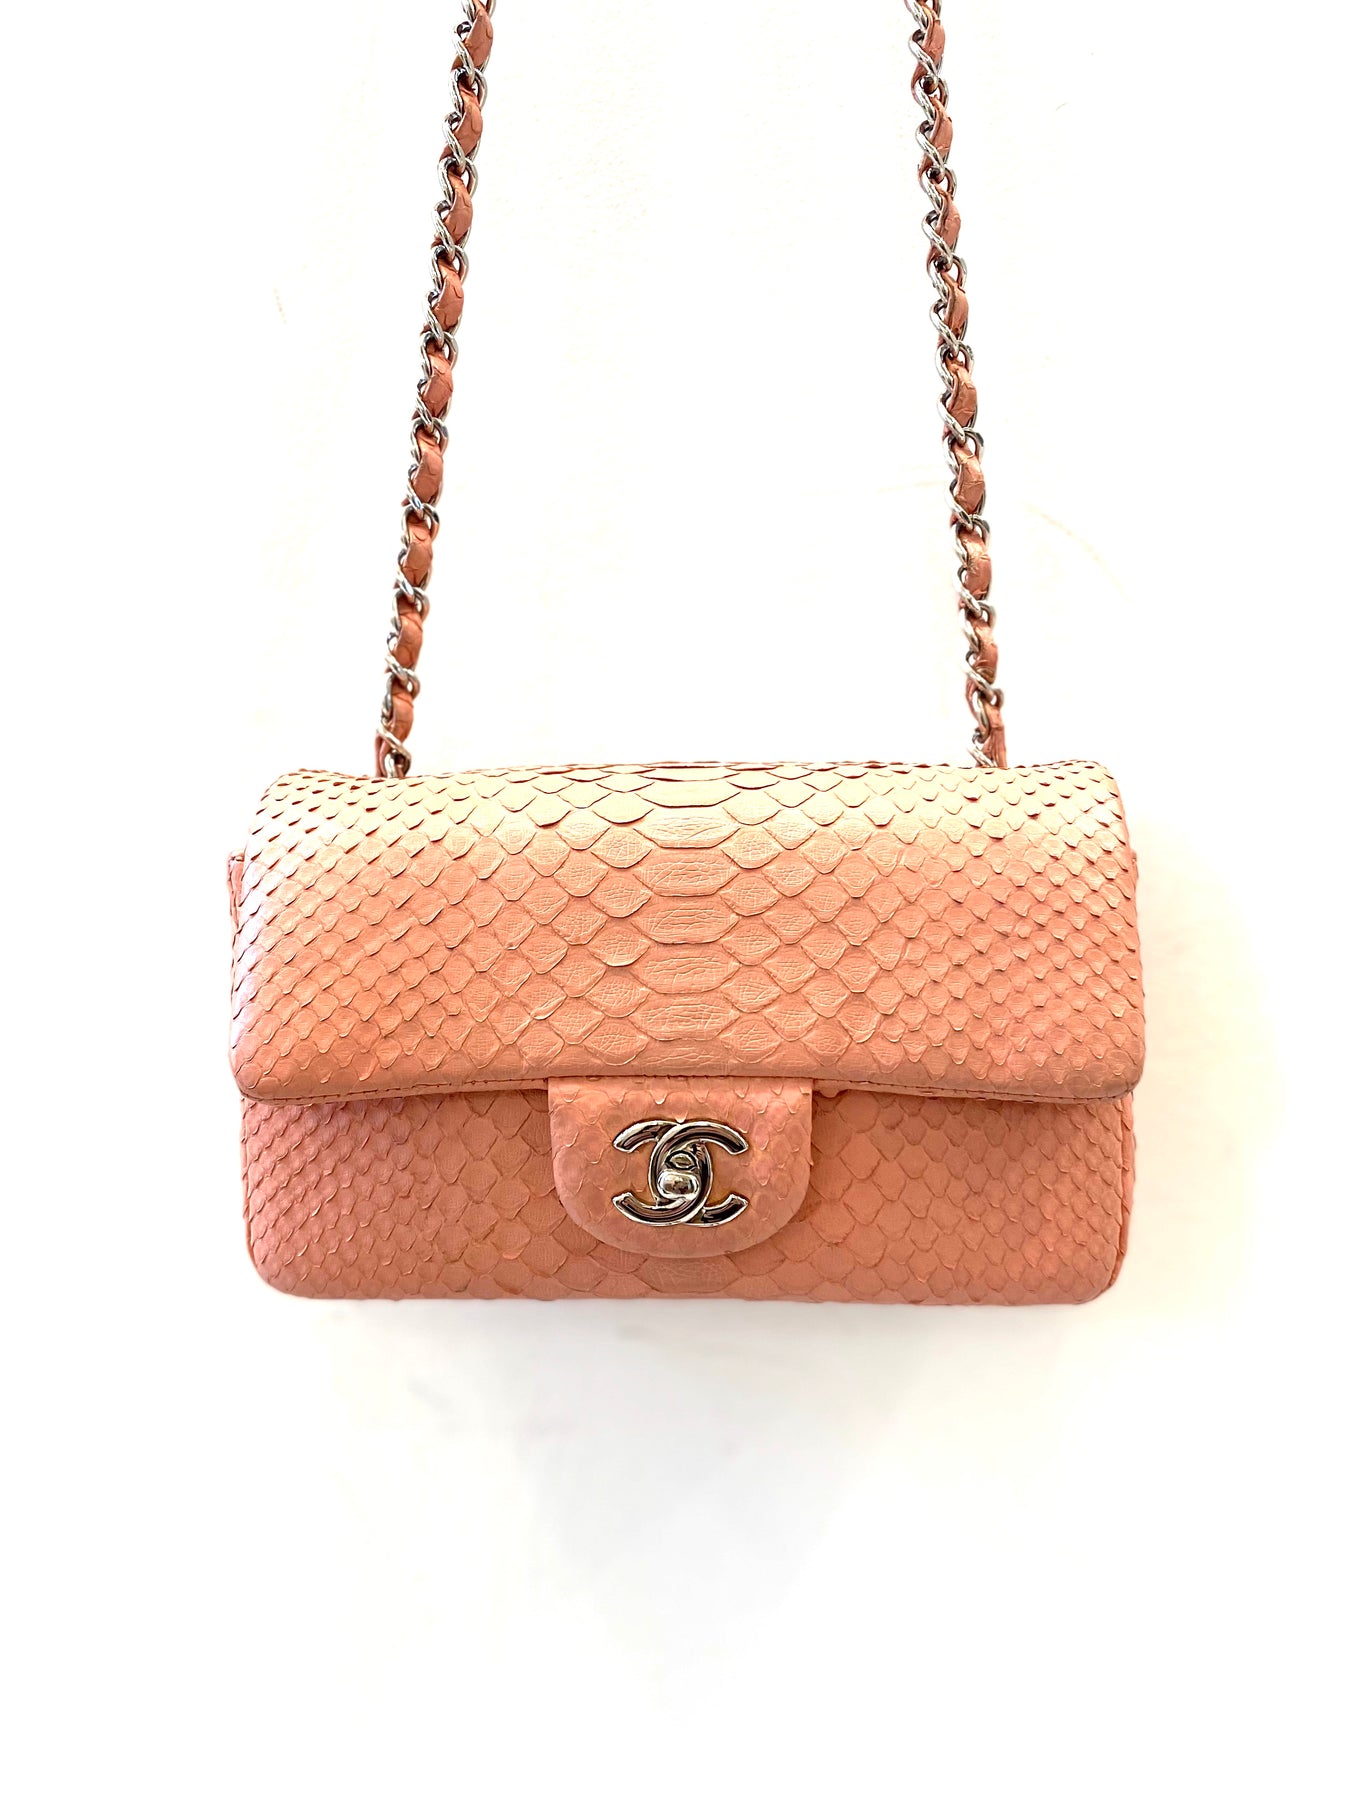 Chanel Gold/Black Python Medium Classic Double Flap Bag - ShopStyle